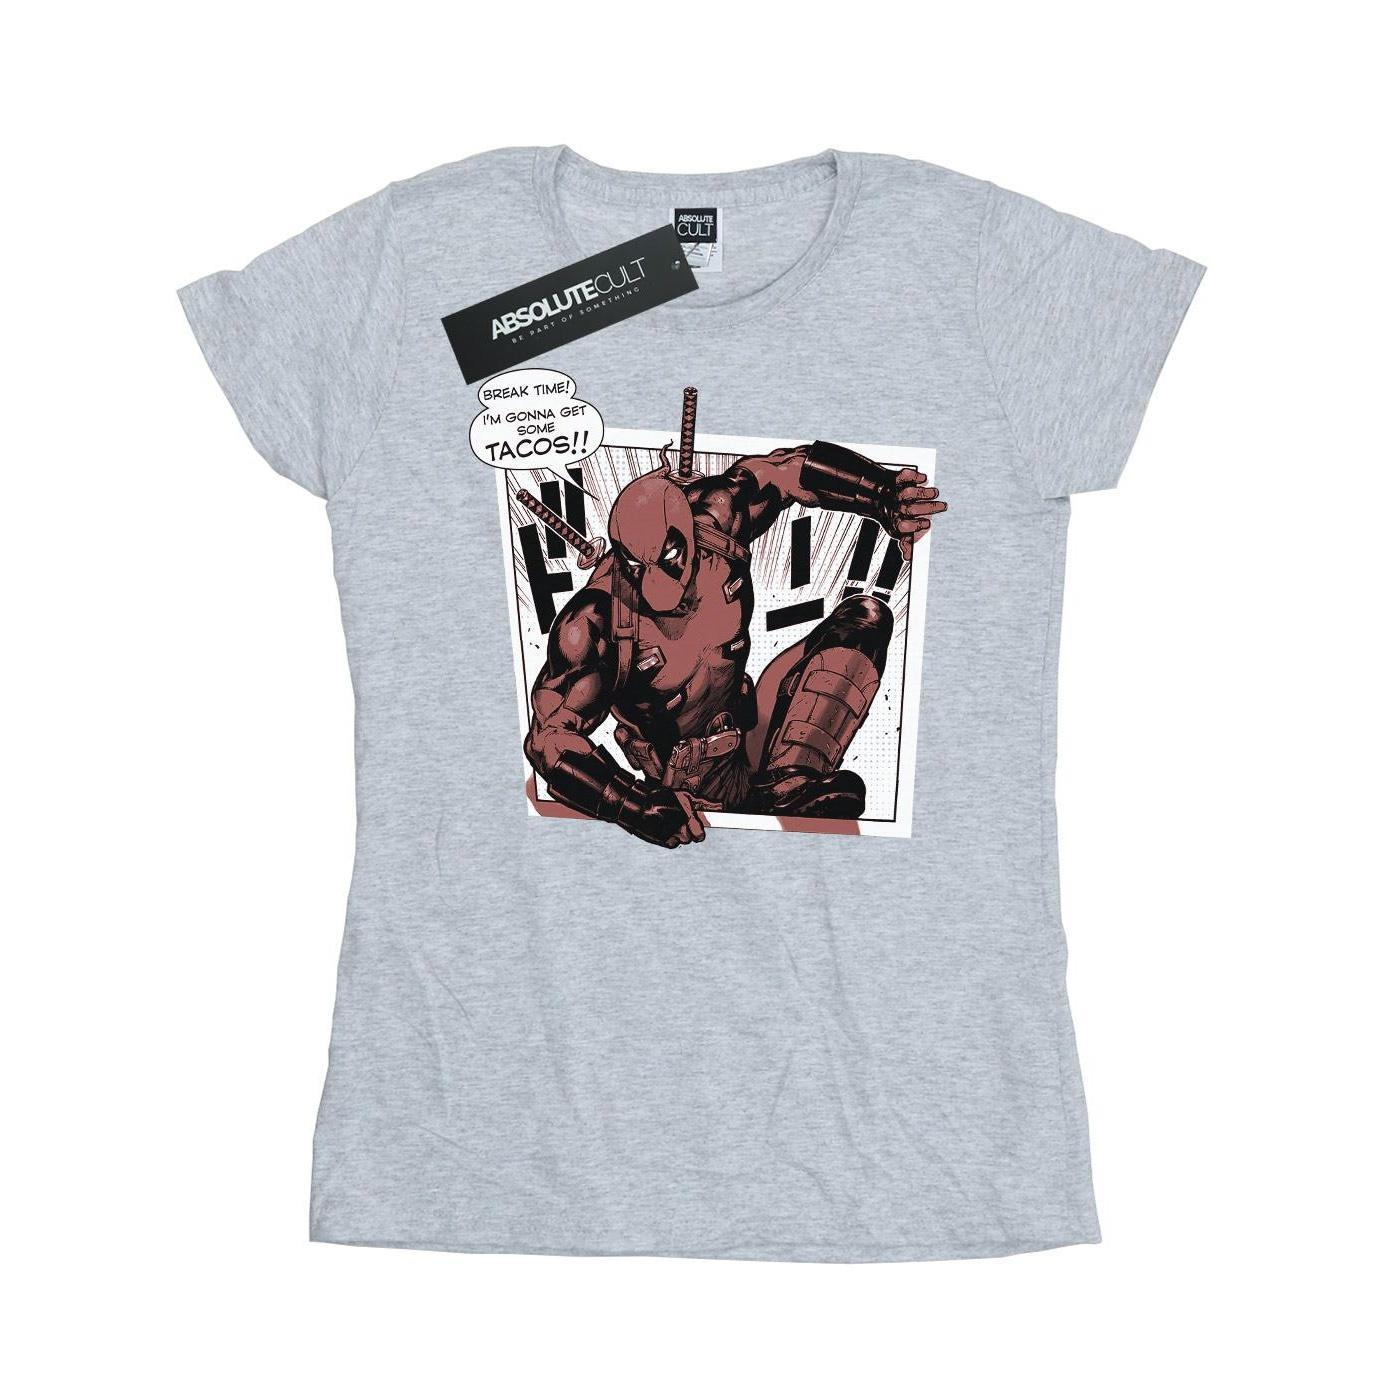 Marvel Womens/Ladies Deadpool Breaktime Tacos Cotton T-Shirt (Sports Grey) (L)